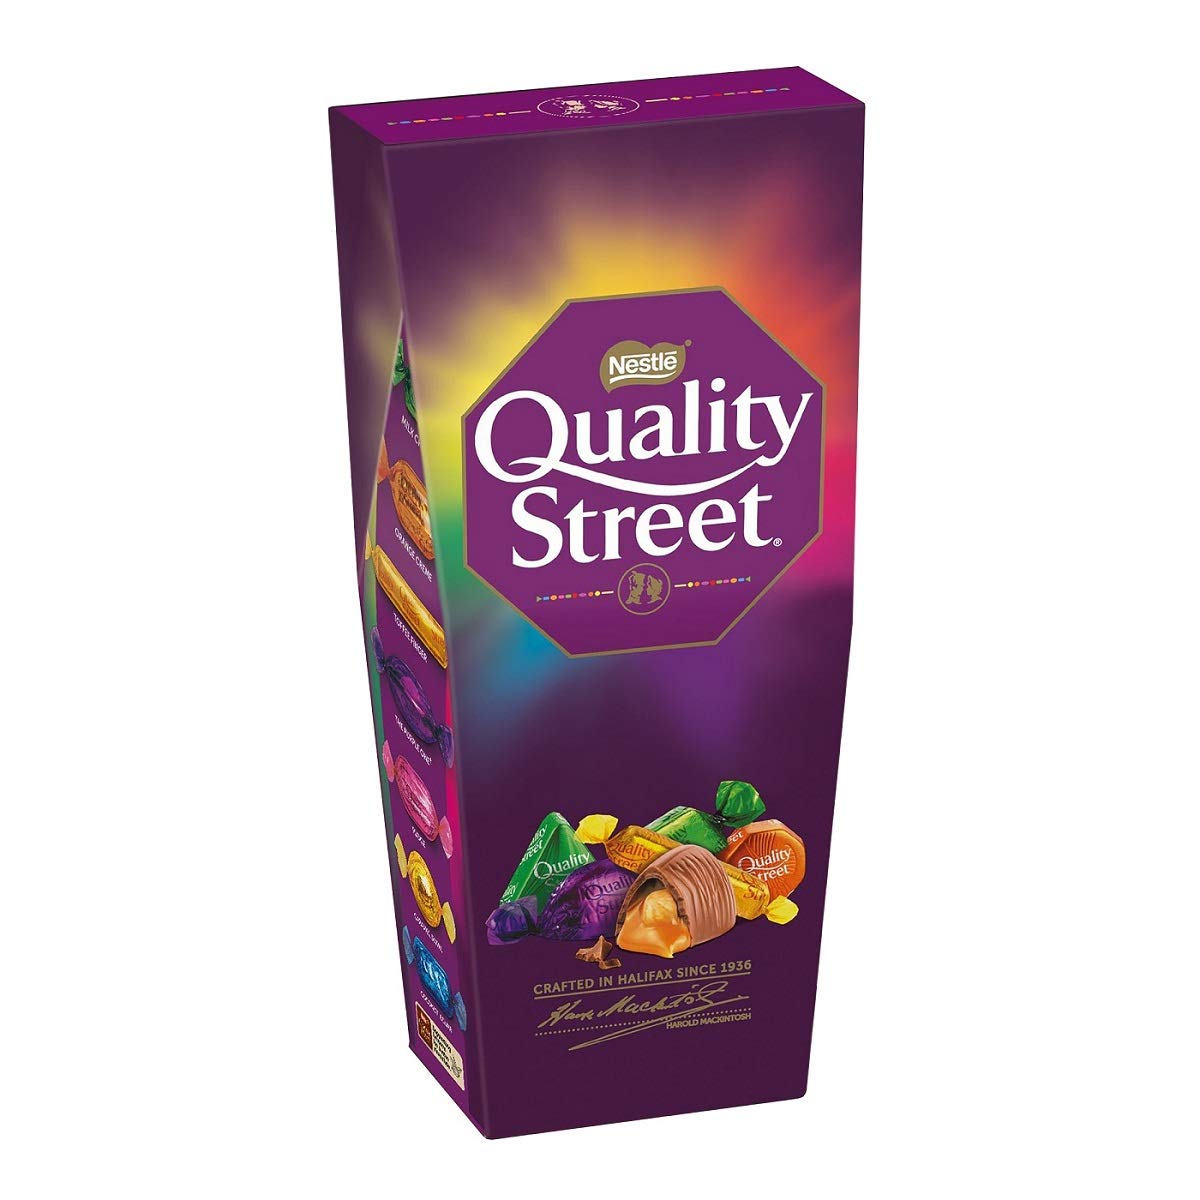 Quality Street Carton 220g